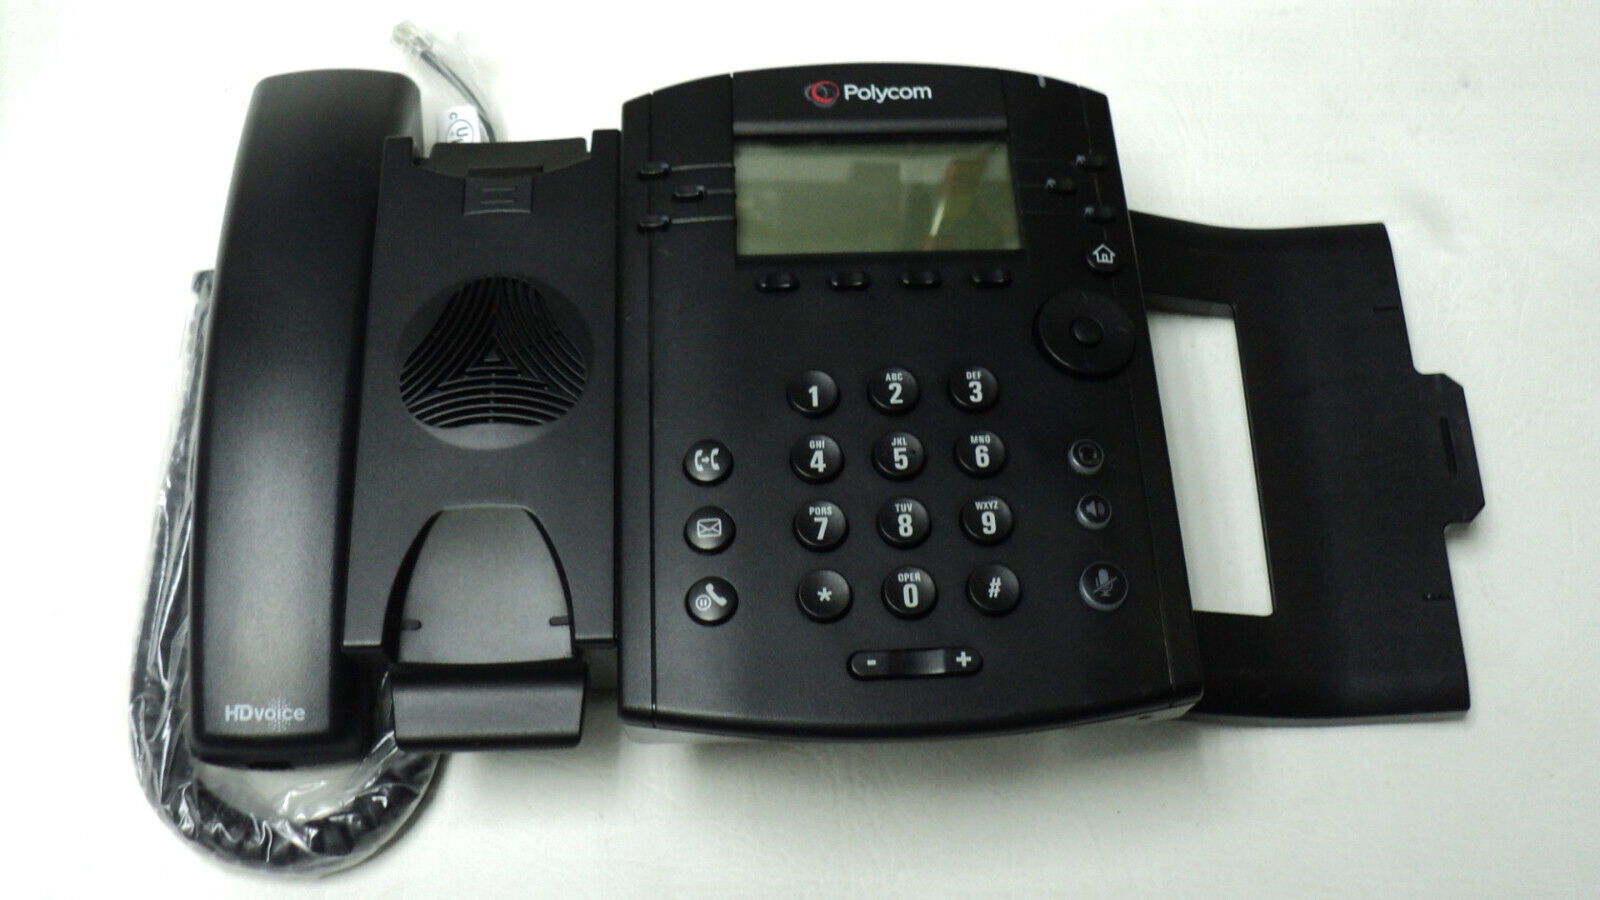 Polycom VVX 311 VoIP IP Phone & Stand Tested Reset VVX311 2201-48350-001 Skype